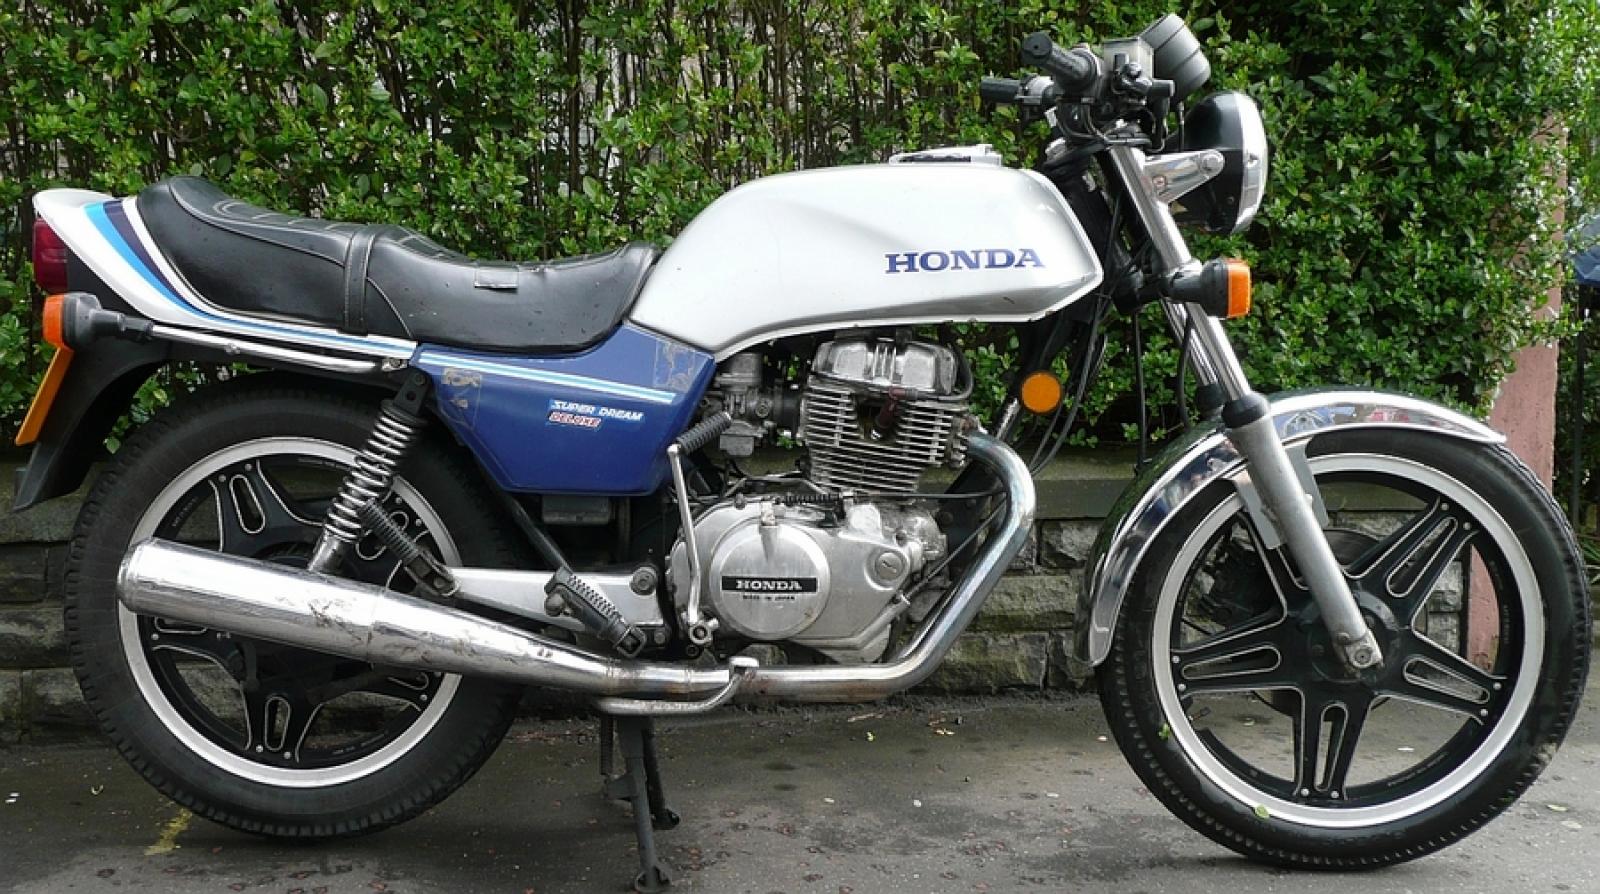 HONDA CB 250 N Superdream Deluxe. Classic 1982 bike with 